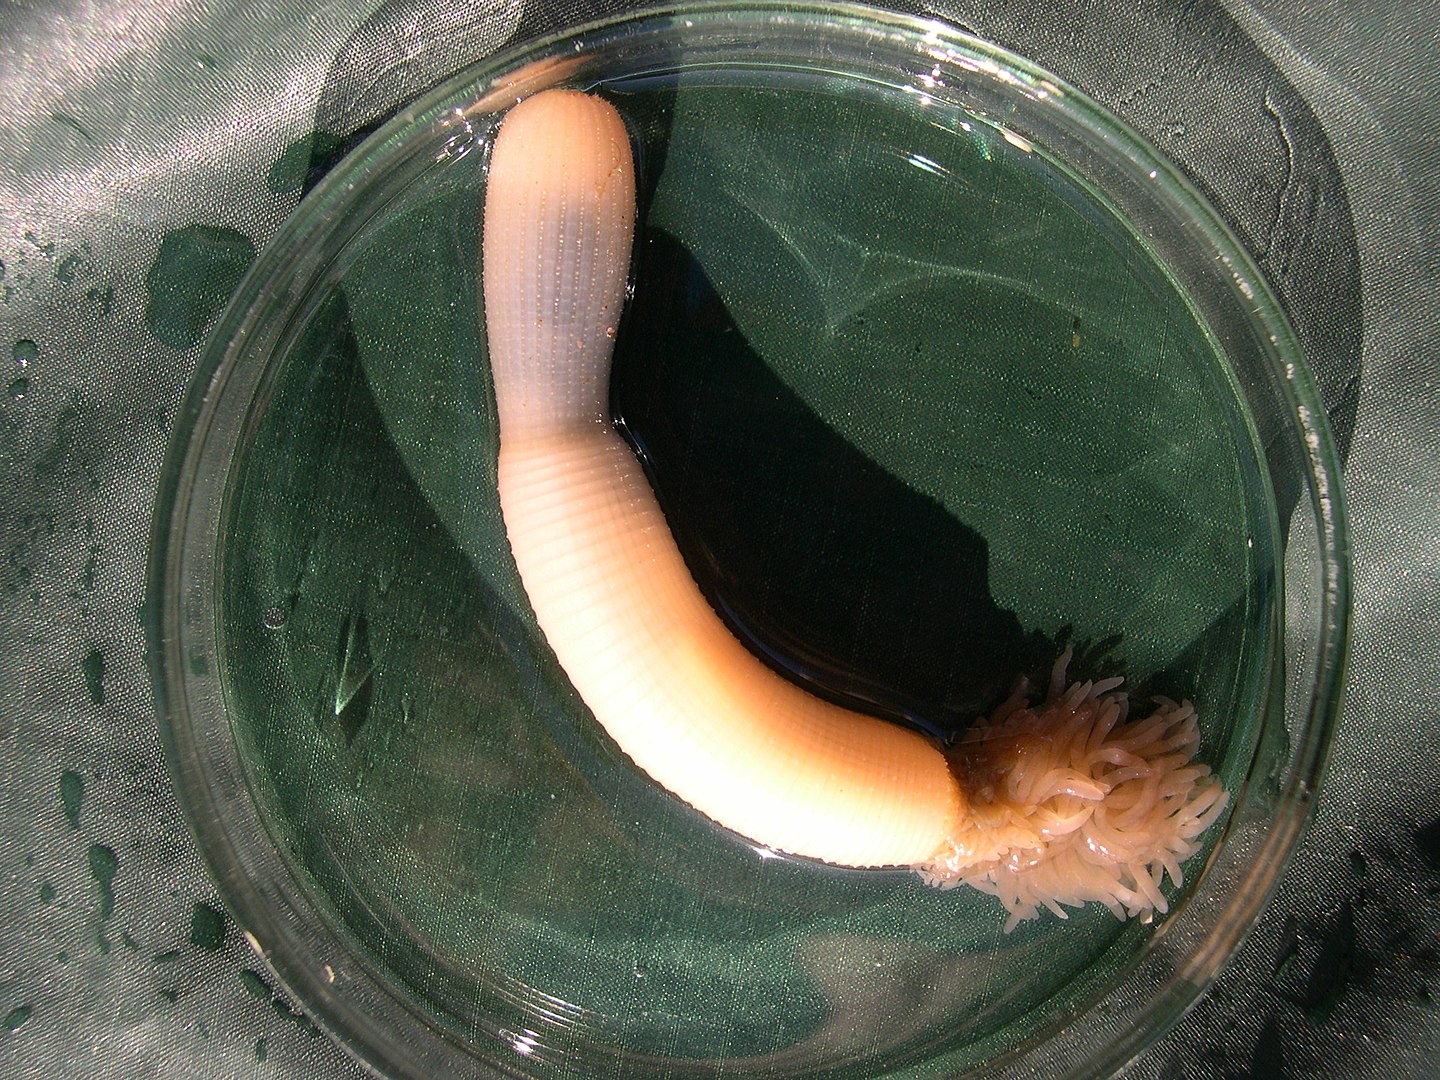 Com formato cilíndrico e cor rosada, estes vermes marinhos lembram o pênis humano (Foto: Wikipedia/ Shunkina Ksenia/ Wikimedia Commons)